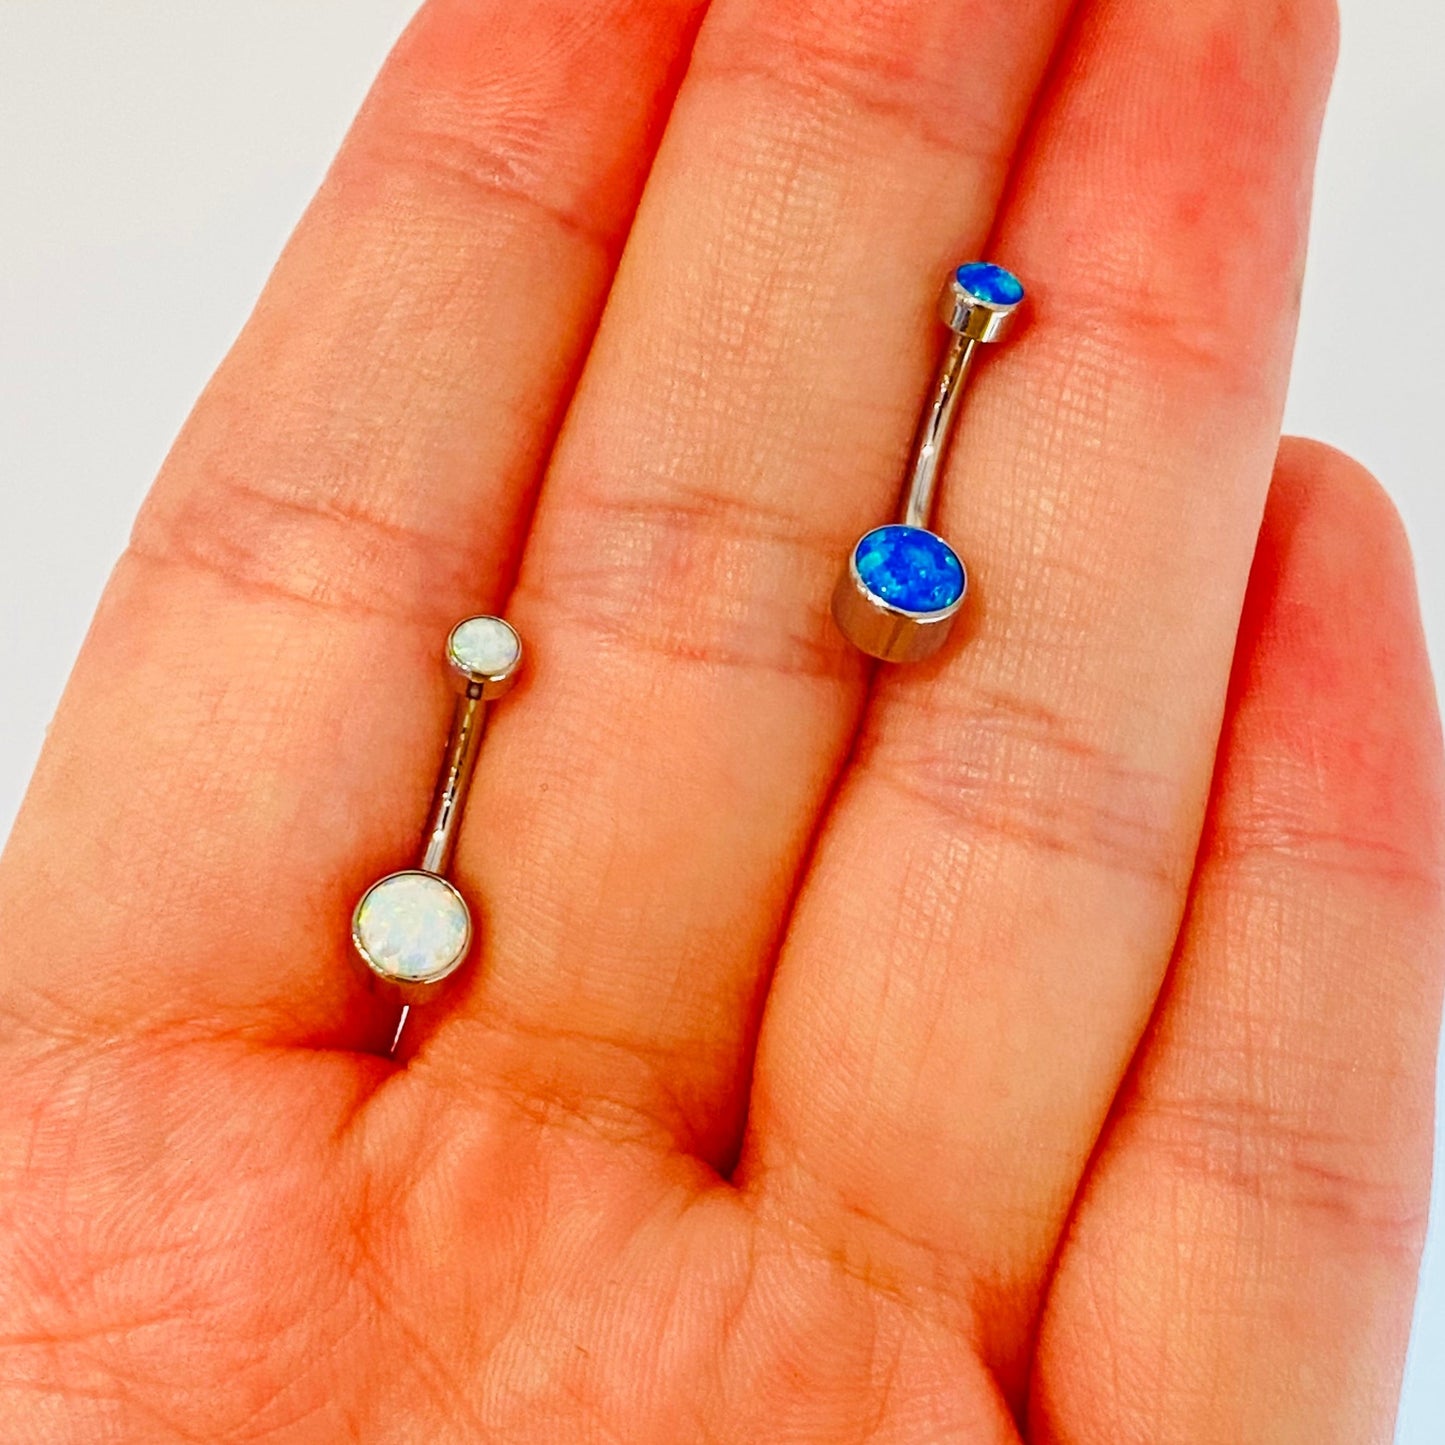 G23 Titanium Internally Threaded Opal Belly Ring